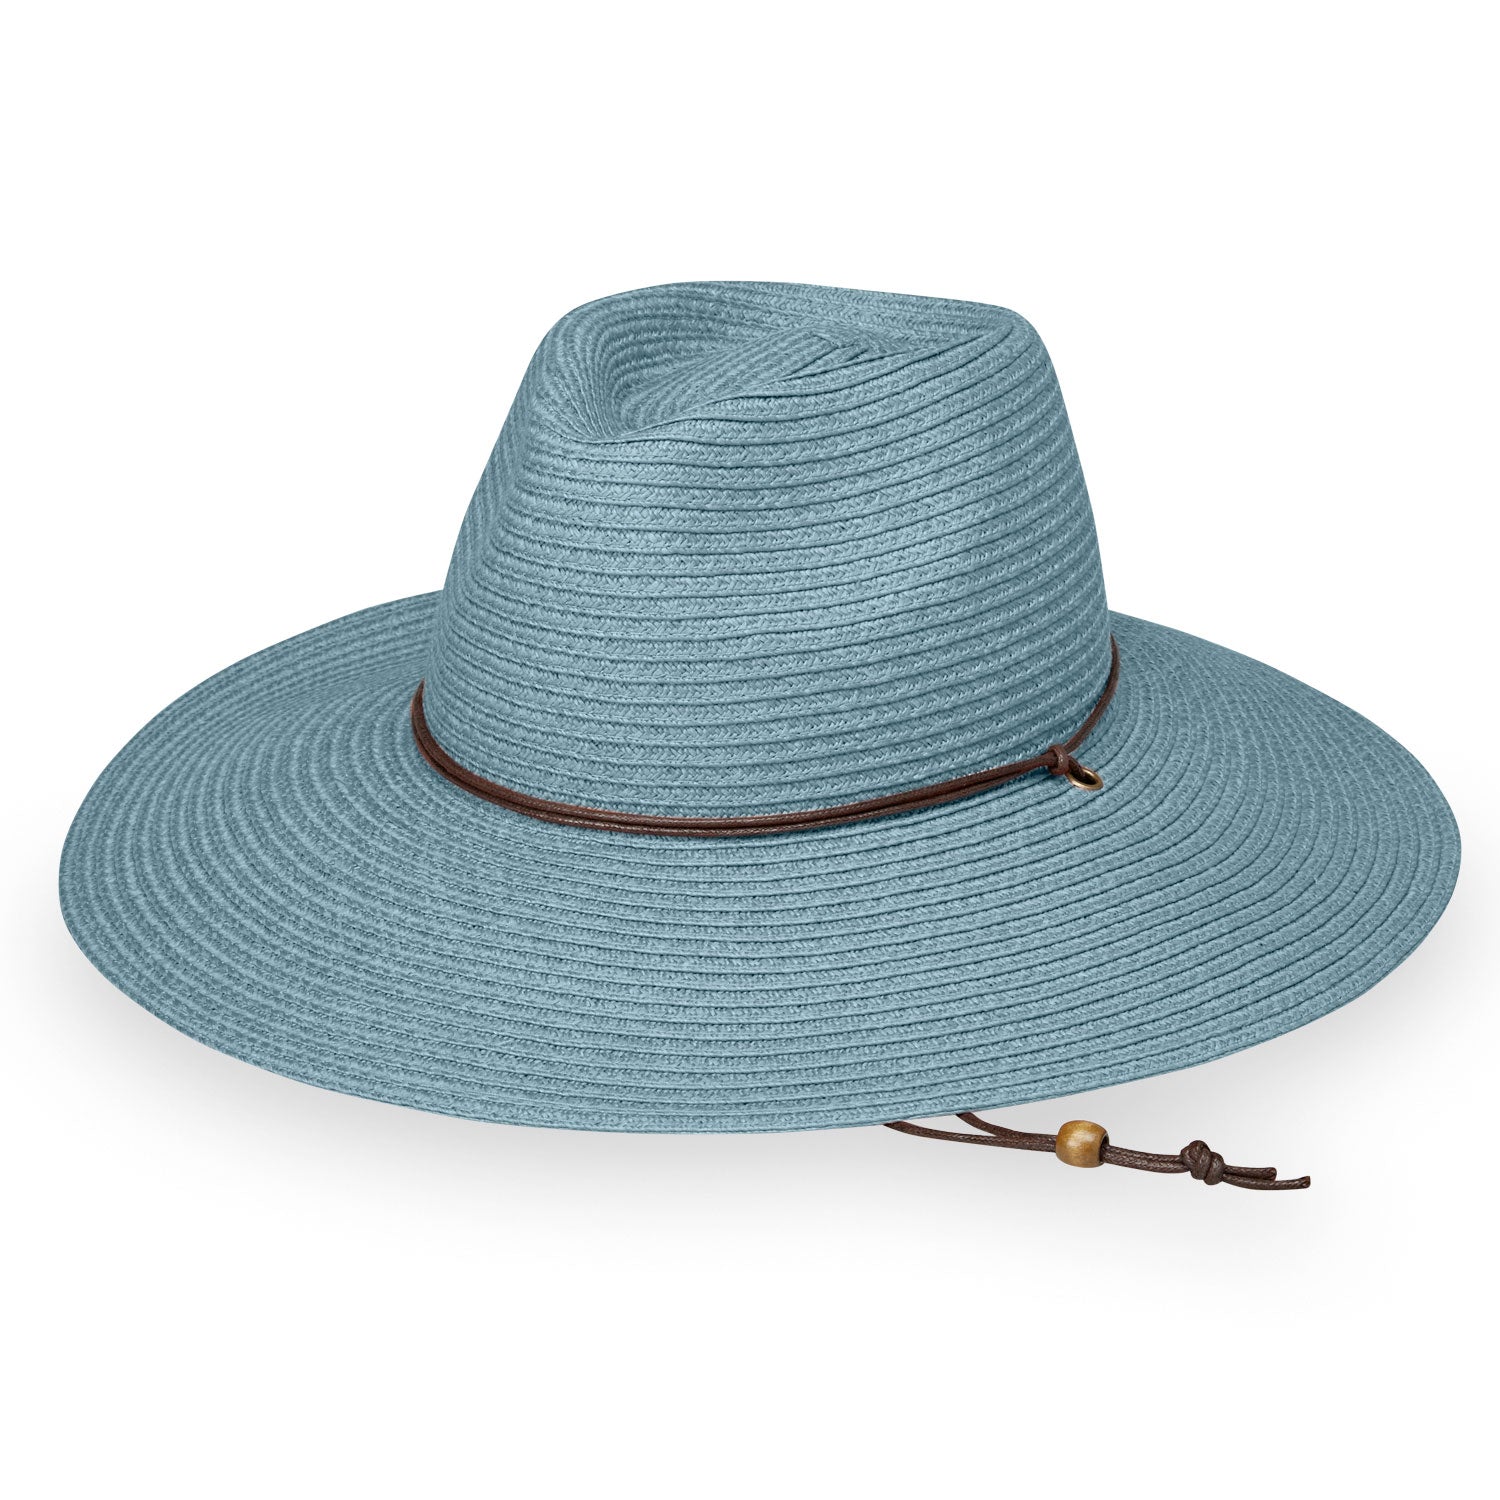 Featuring Ladies' Packable Big Wide Brim Sanibel UPF Sun Hat in Cornflower from Wallaroo